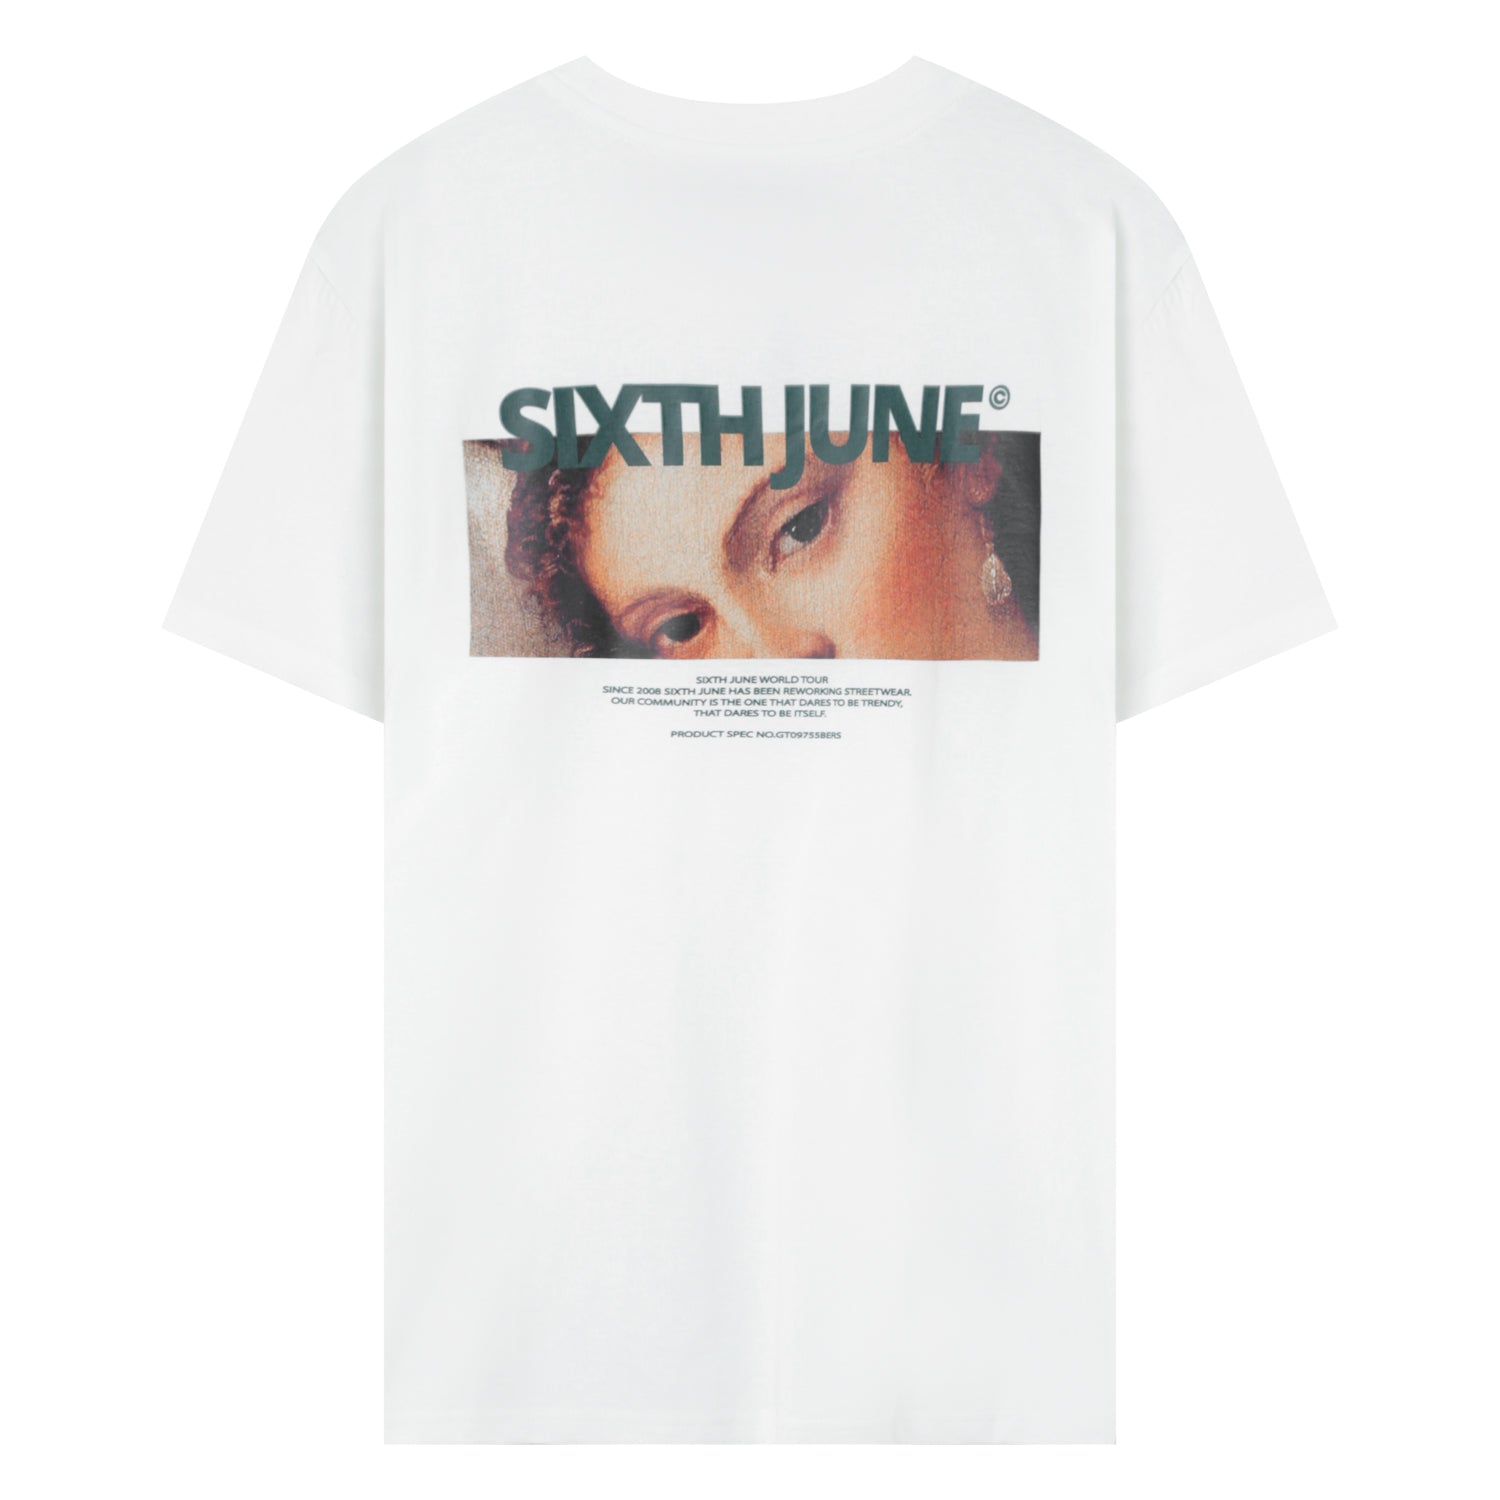 Sixth June - T-shirt regard imprimé Blanc